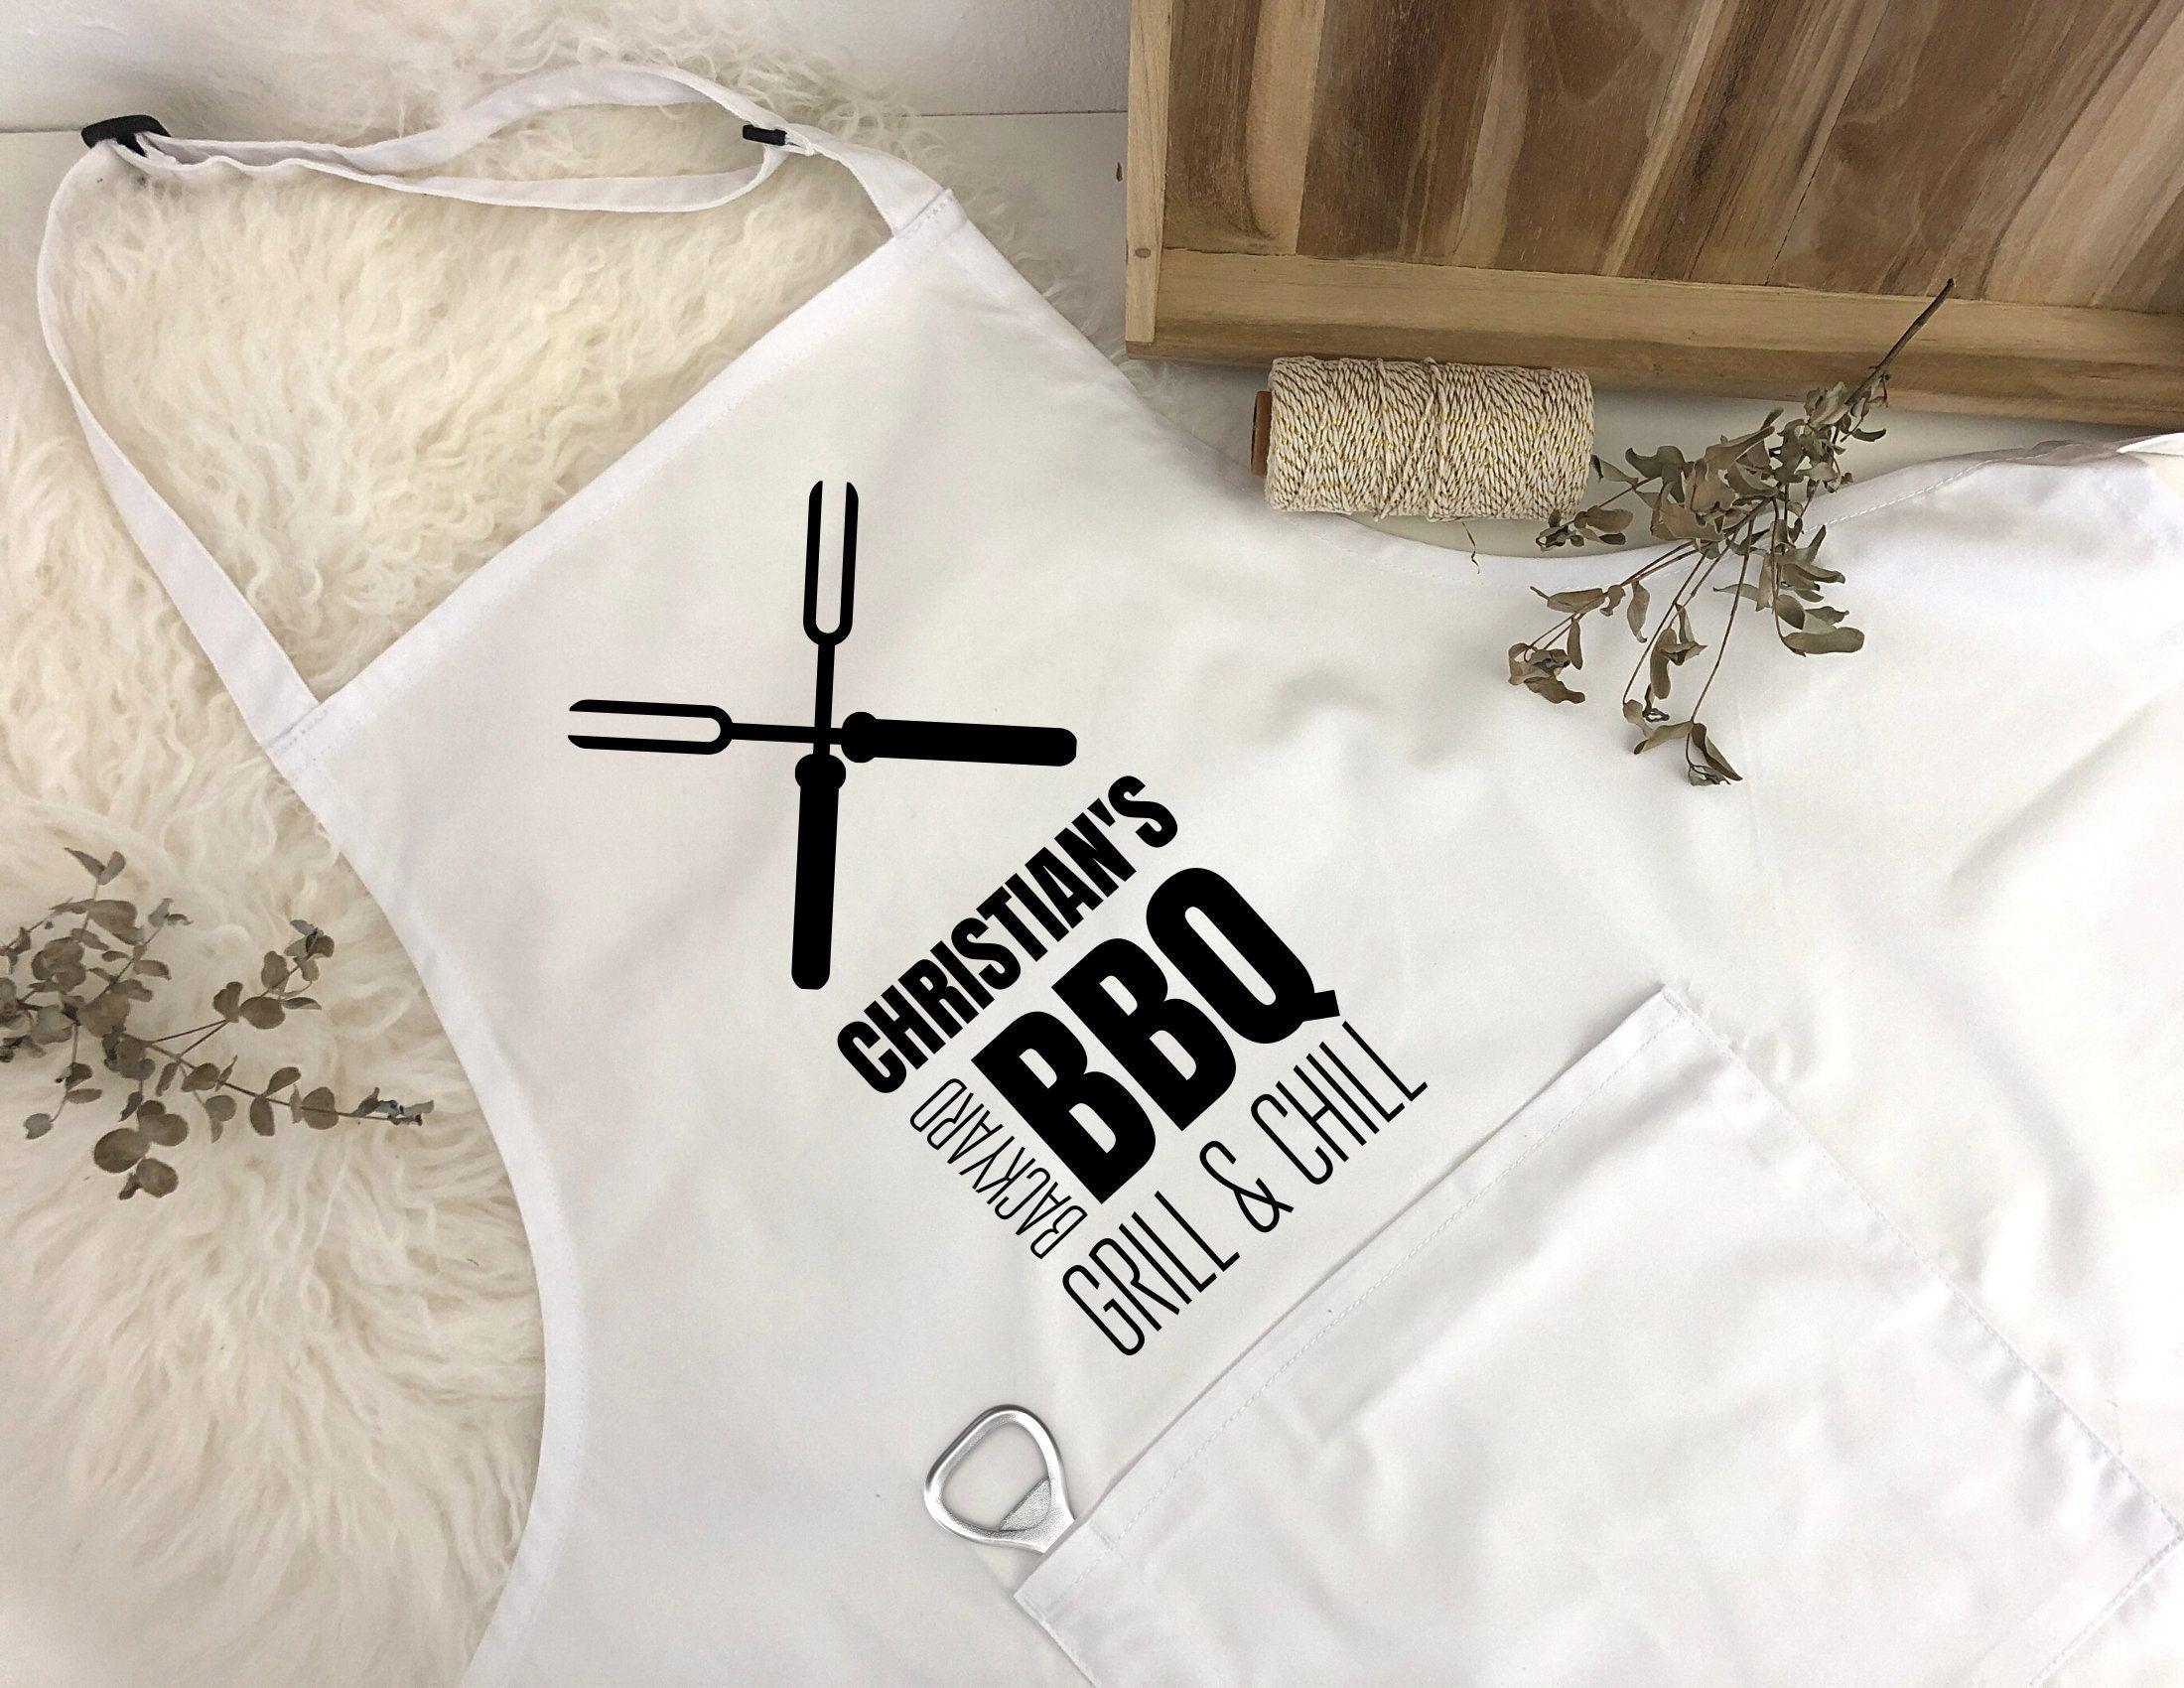 Grillschürze | BBQ Grill & Chill | personalisiert - Roo's Gift Shop